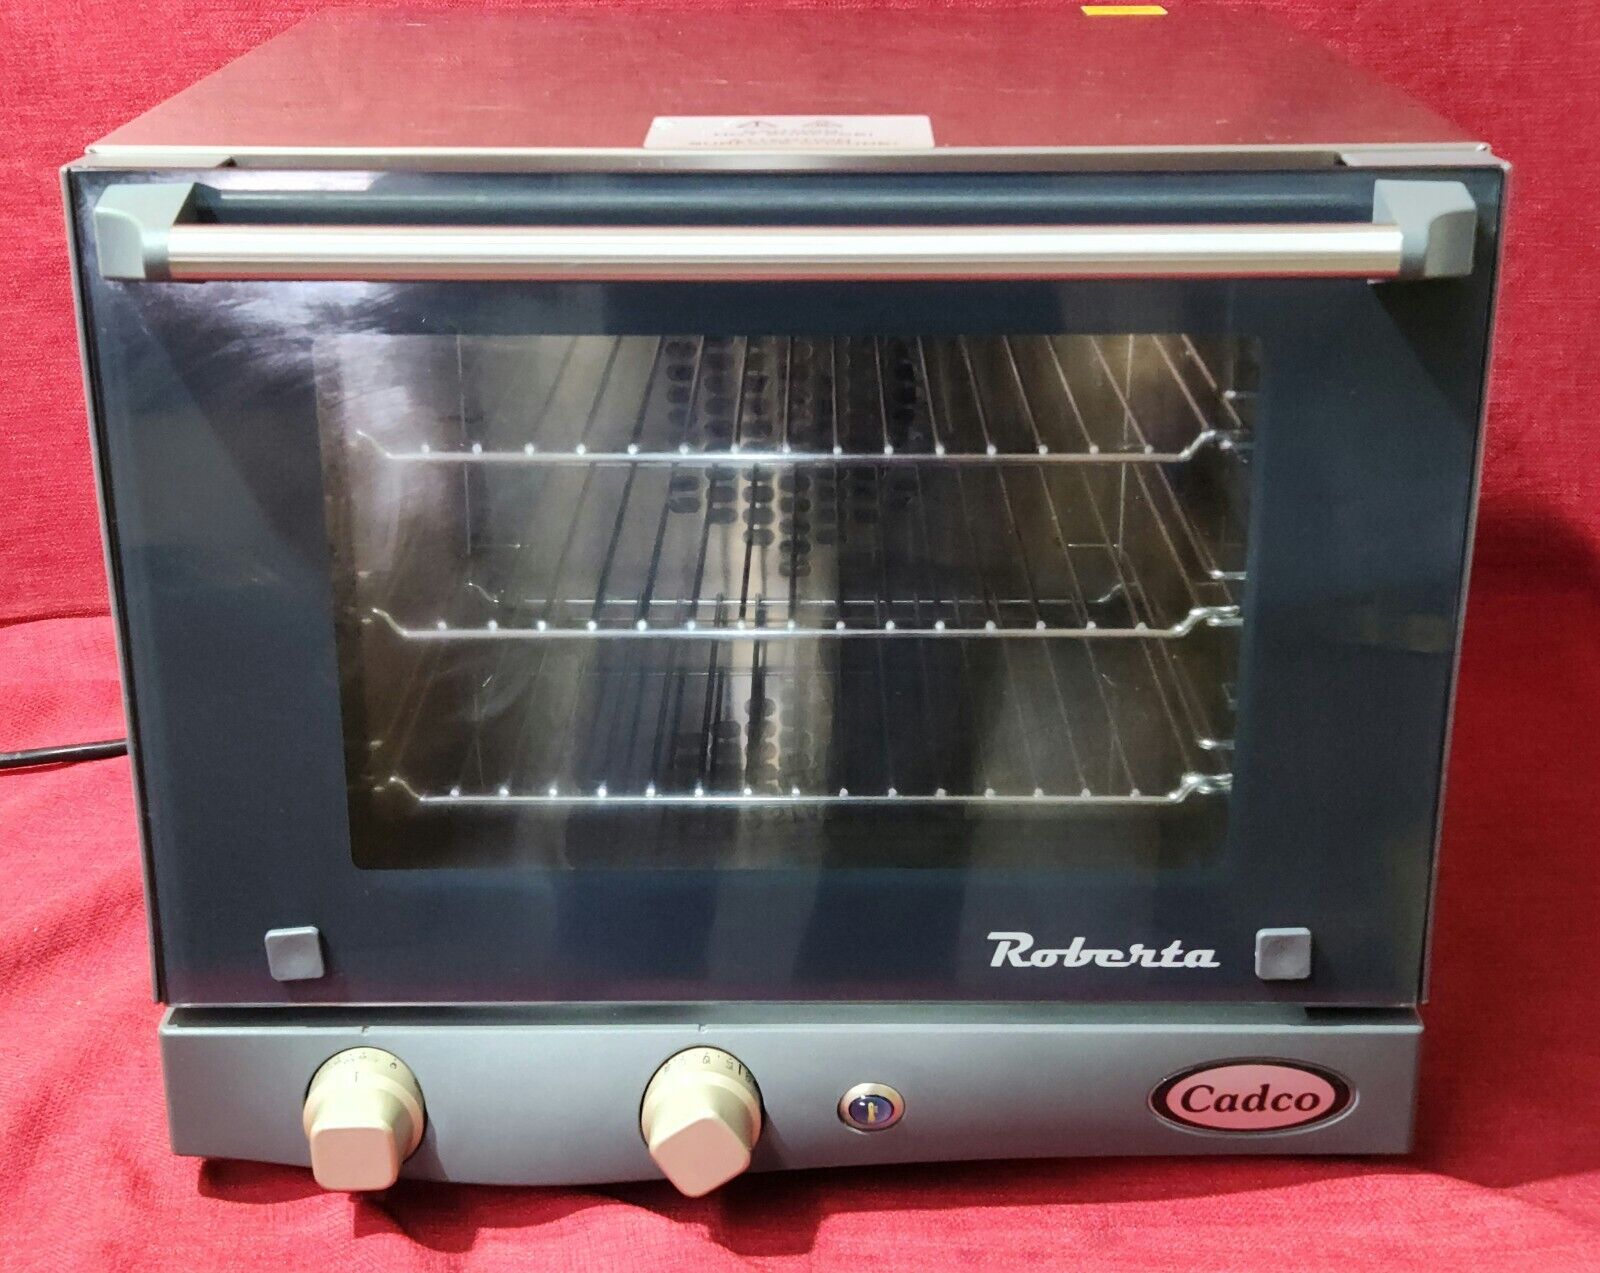 SANITIZED Cadco Roberta Electric 1/4 Size Countertop Convection Oven XAF003 7955